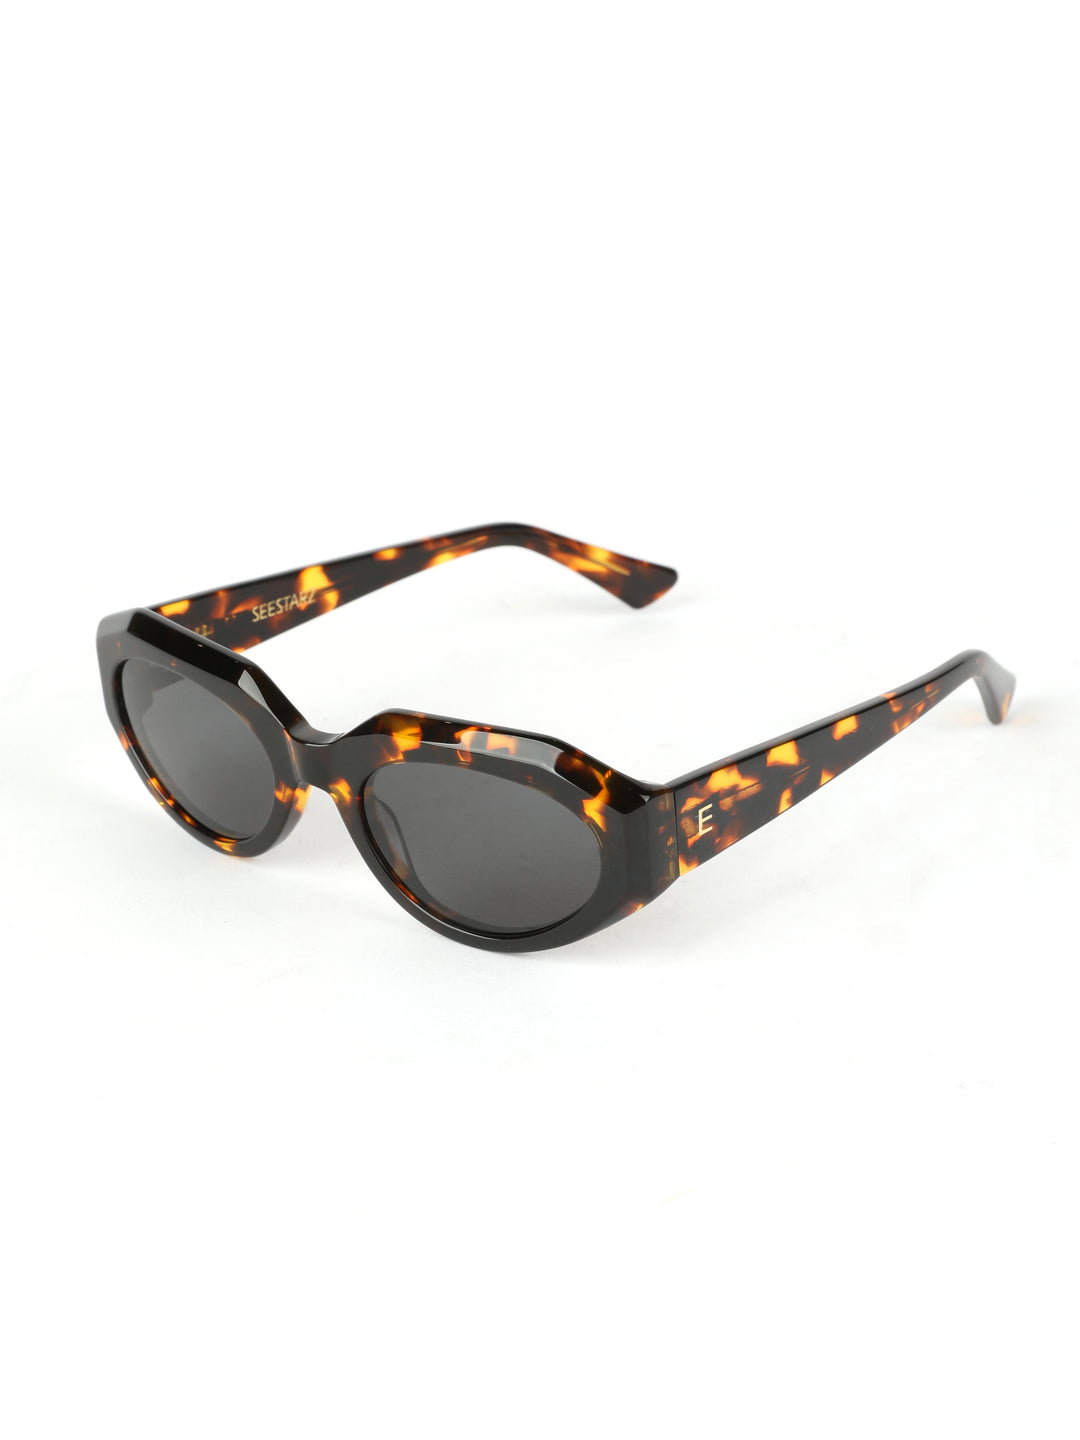  See You No.2 Leopard Sunglasses משקפי שמש איכותיות